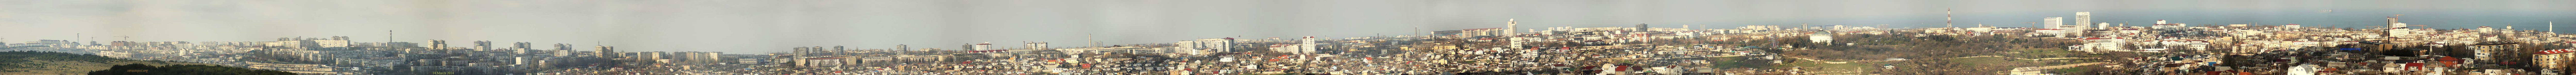 севастополь, панорама города, 14 Марта 2014